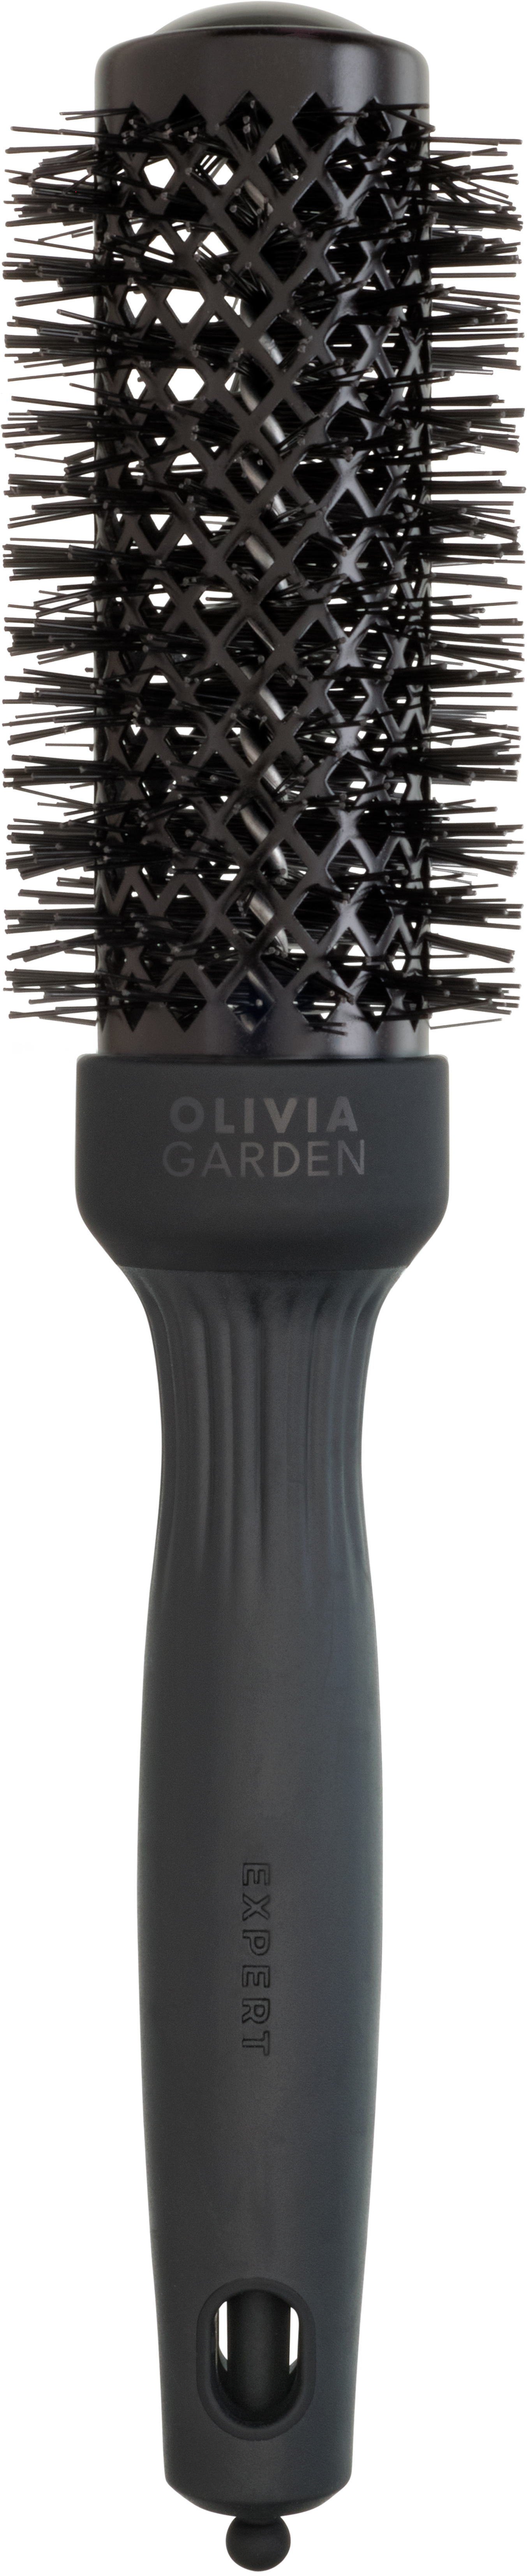 Olivia Garden Expert Blowout Shine Wavy Bristles Black Label 35